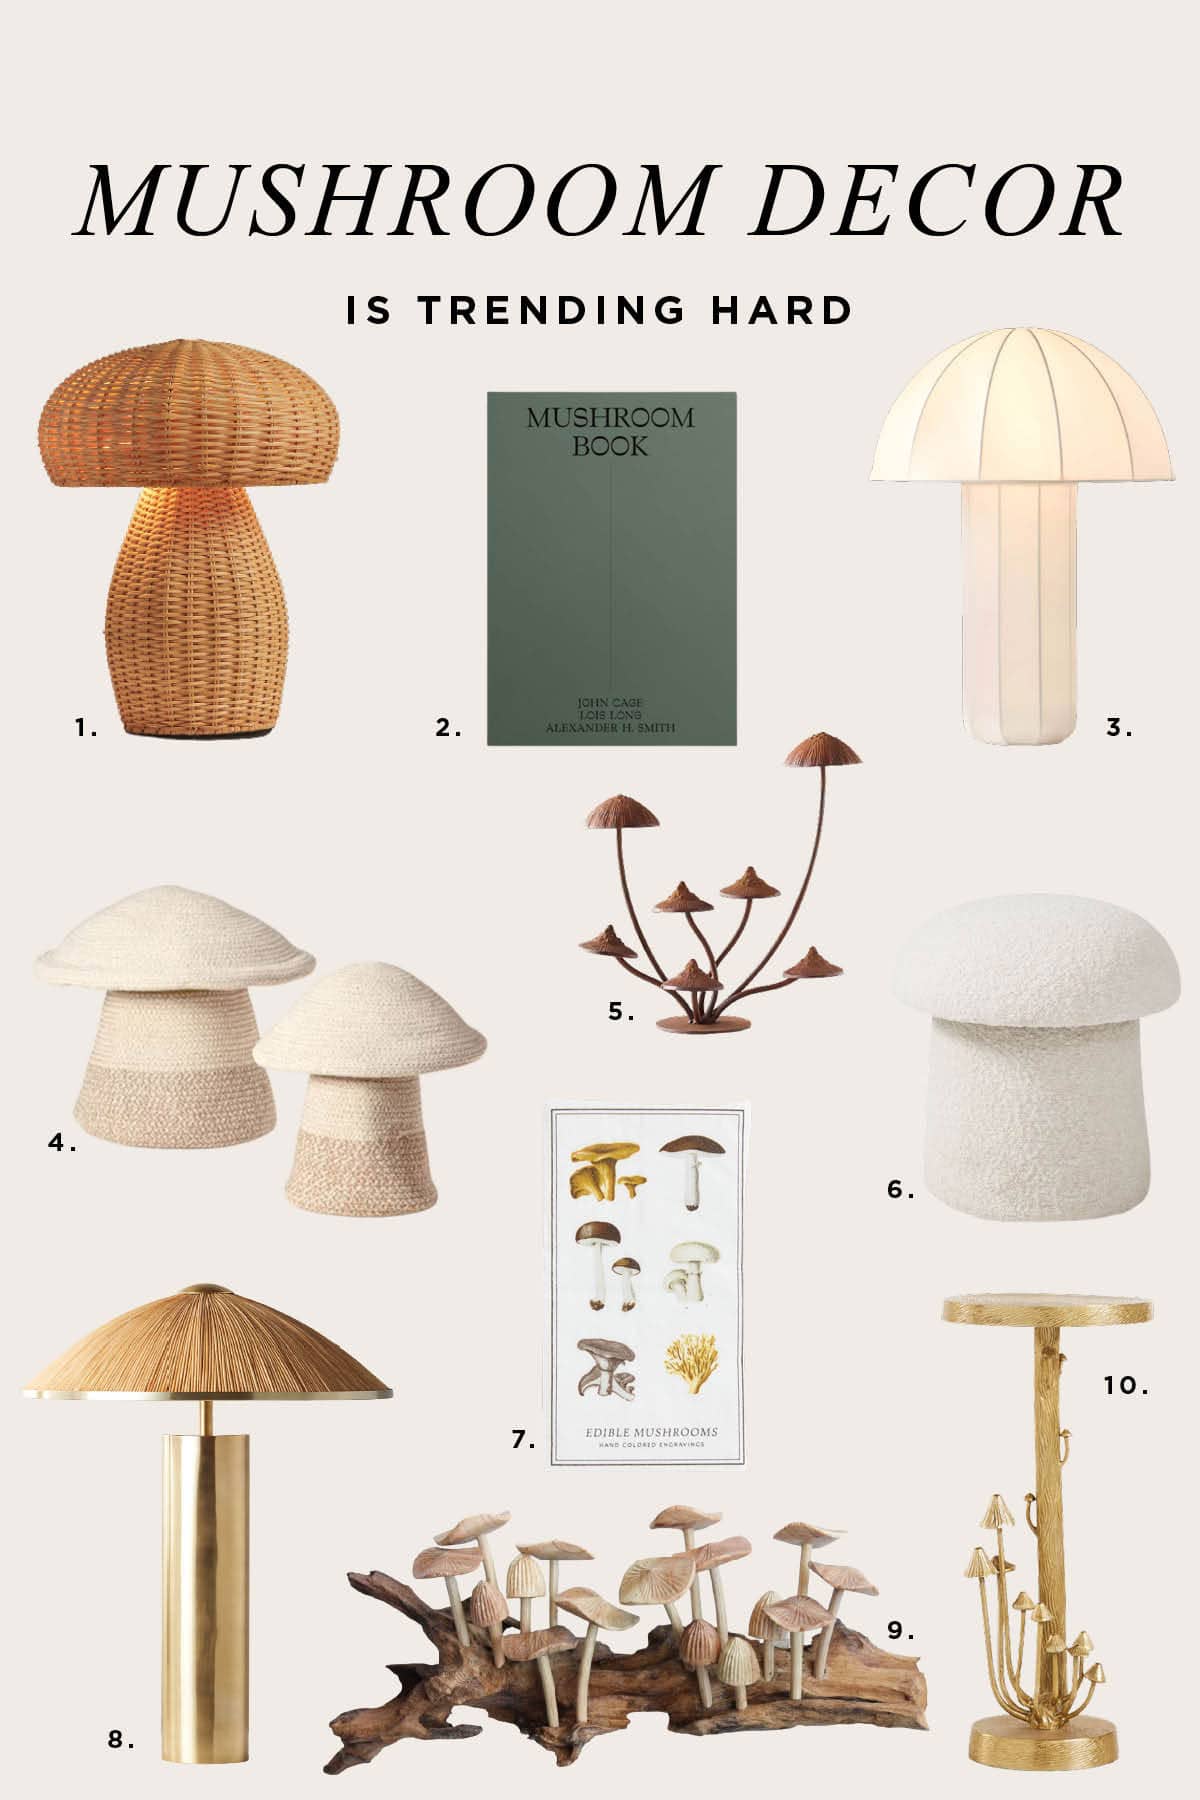 Cute mushroom decor for your home